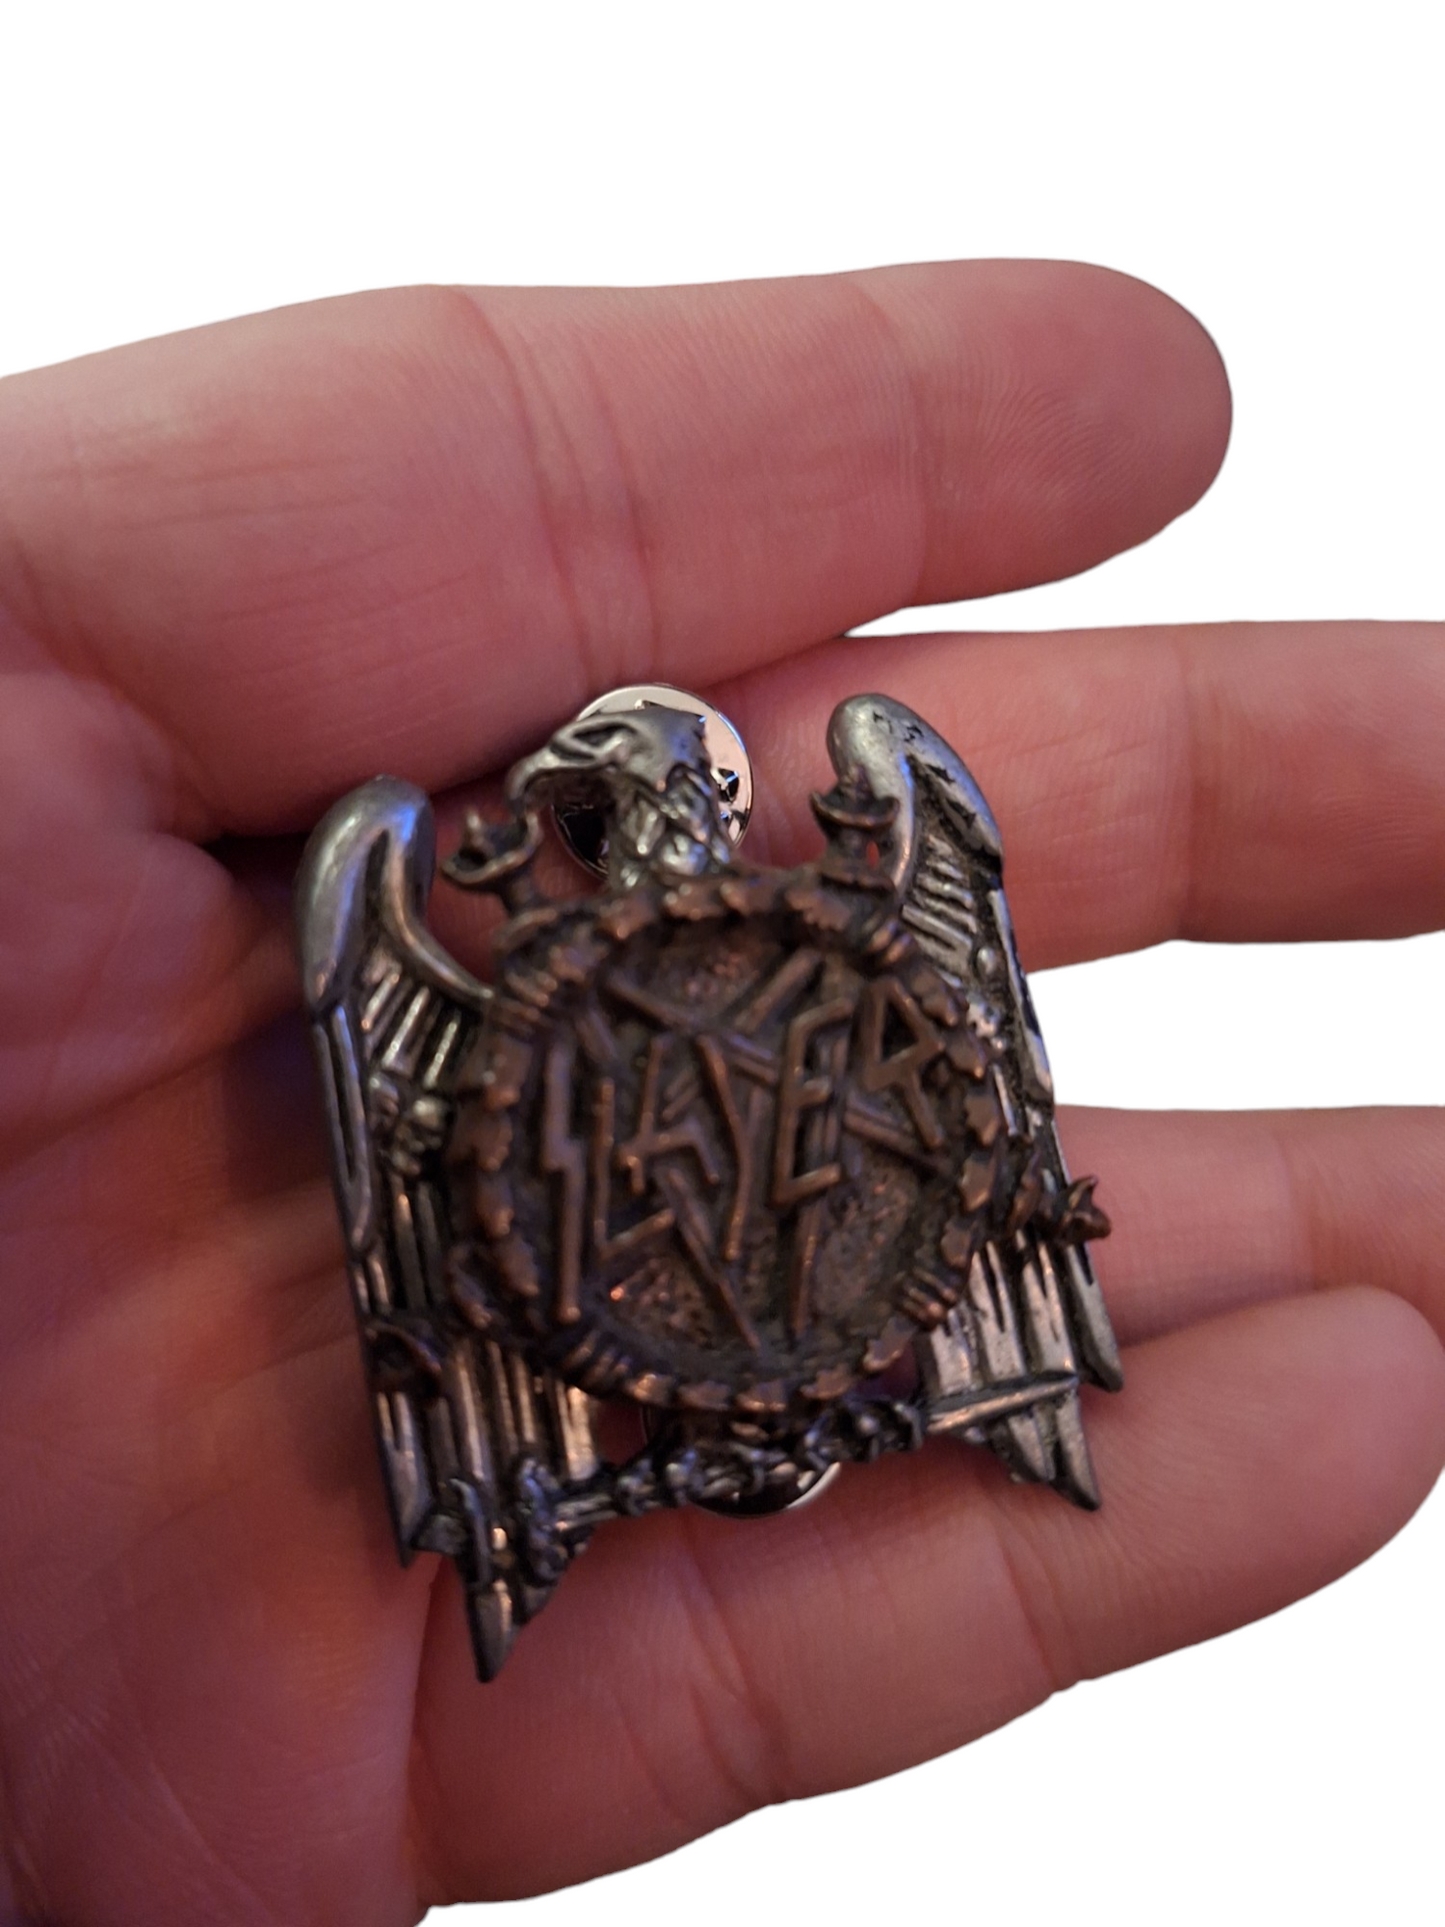 Slayer eagle pin